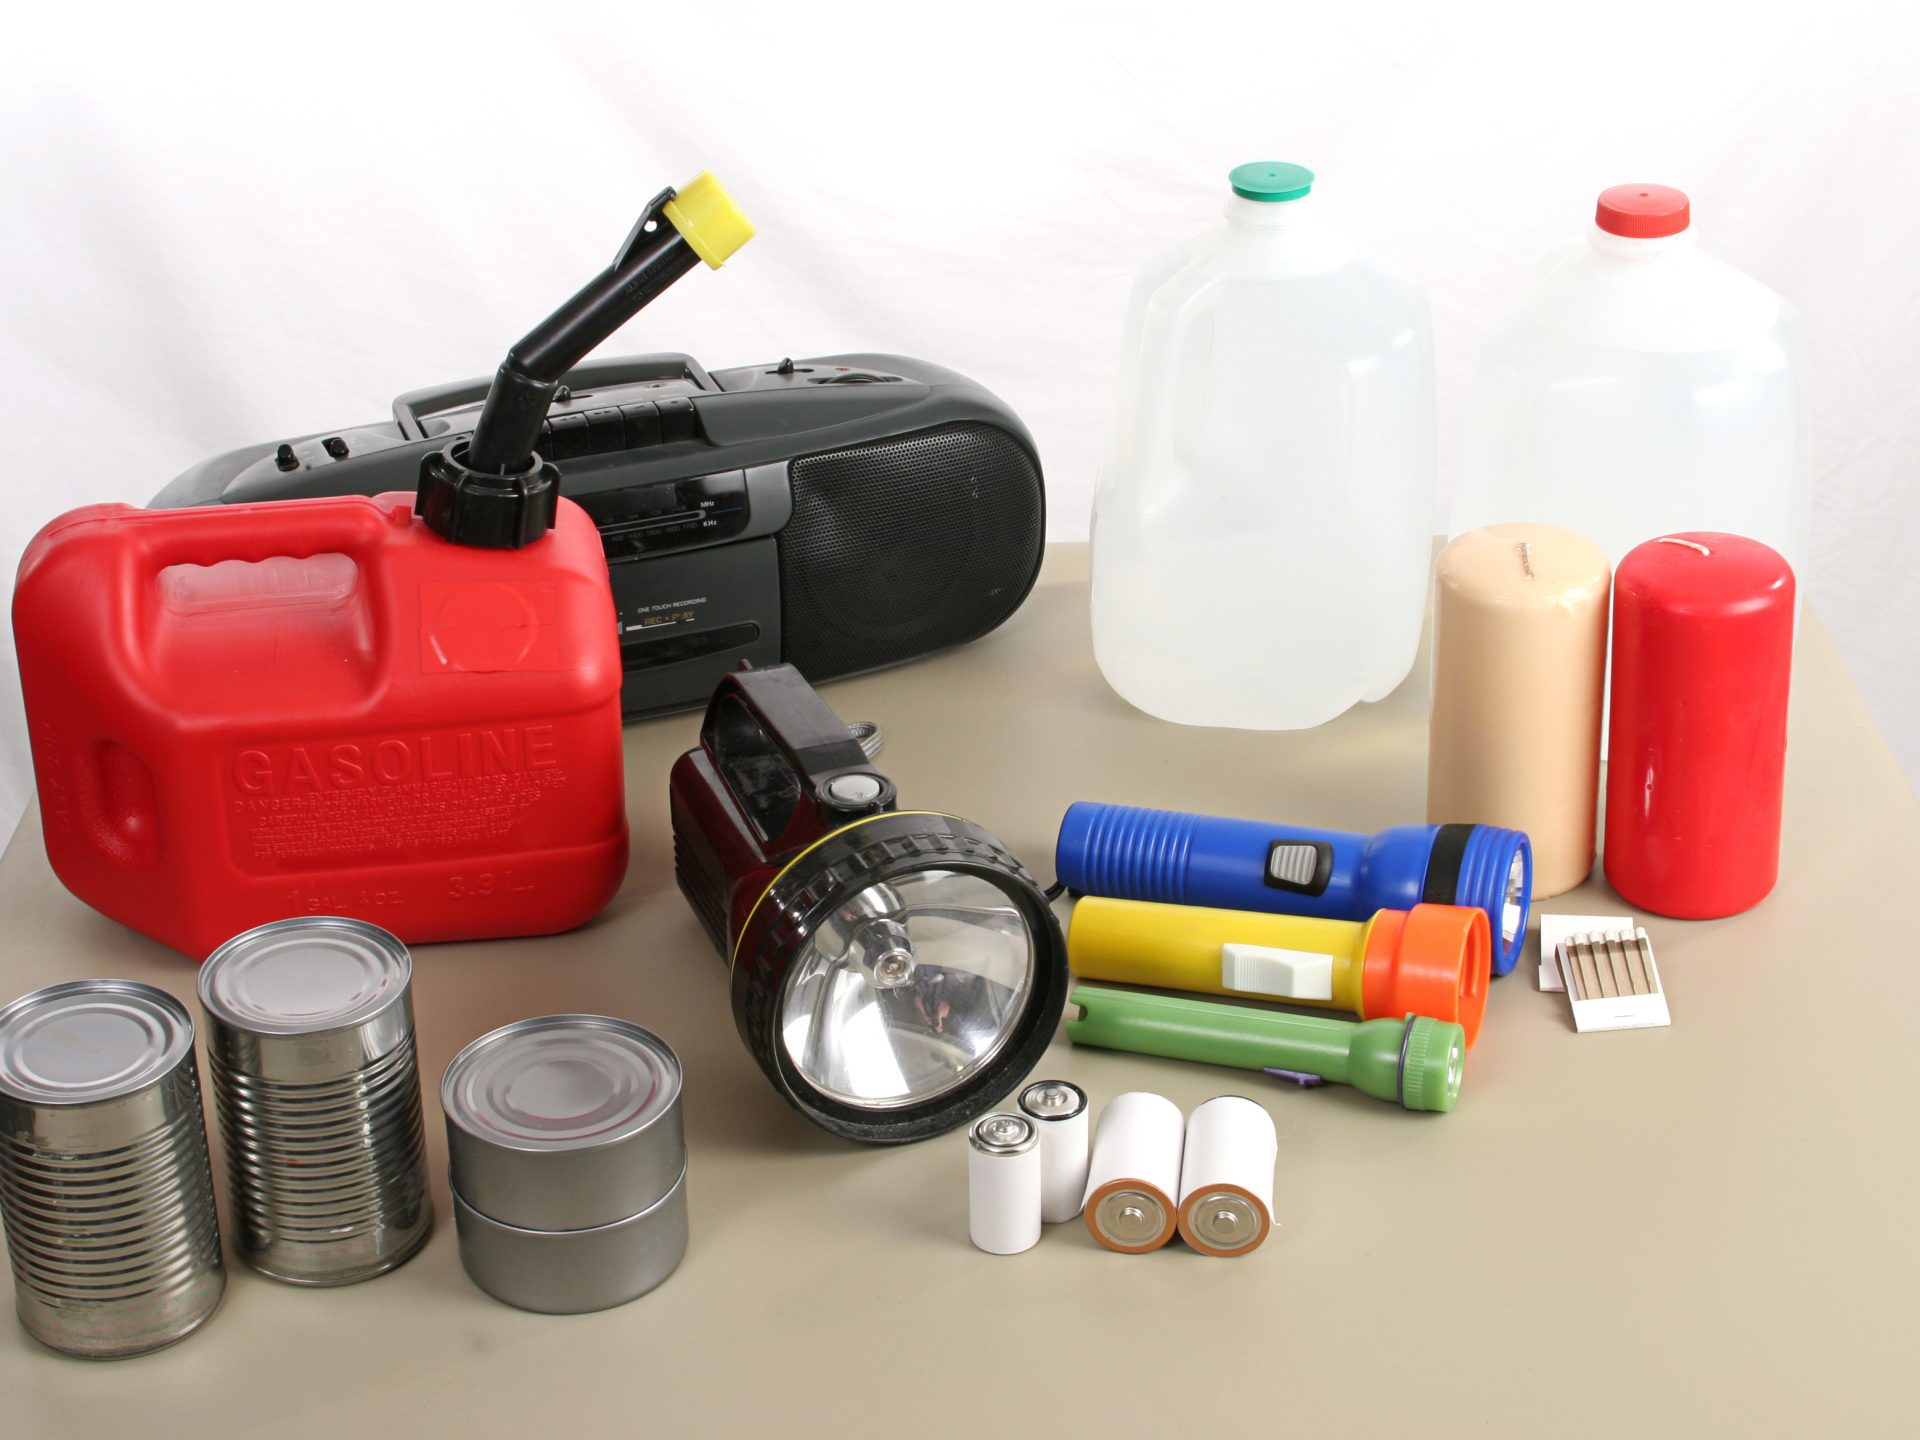 Hurricane supplies for hurricane preparedness